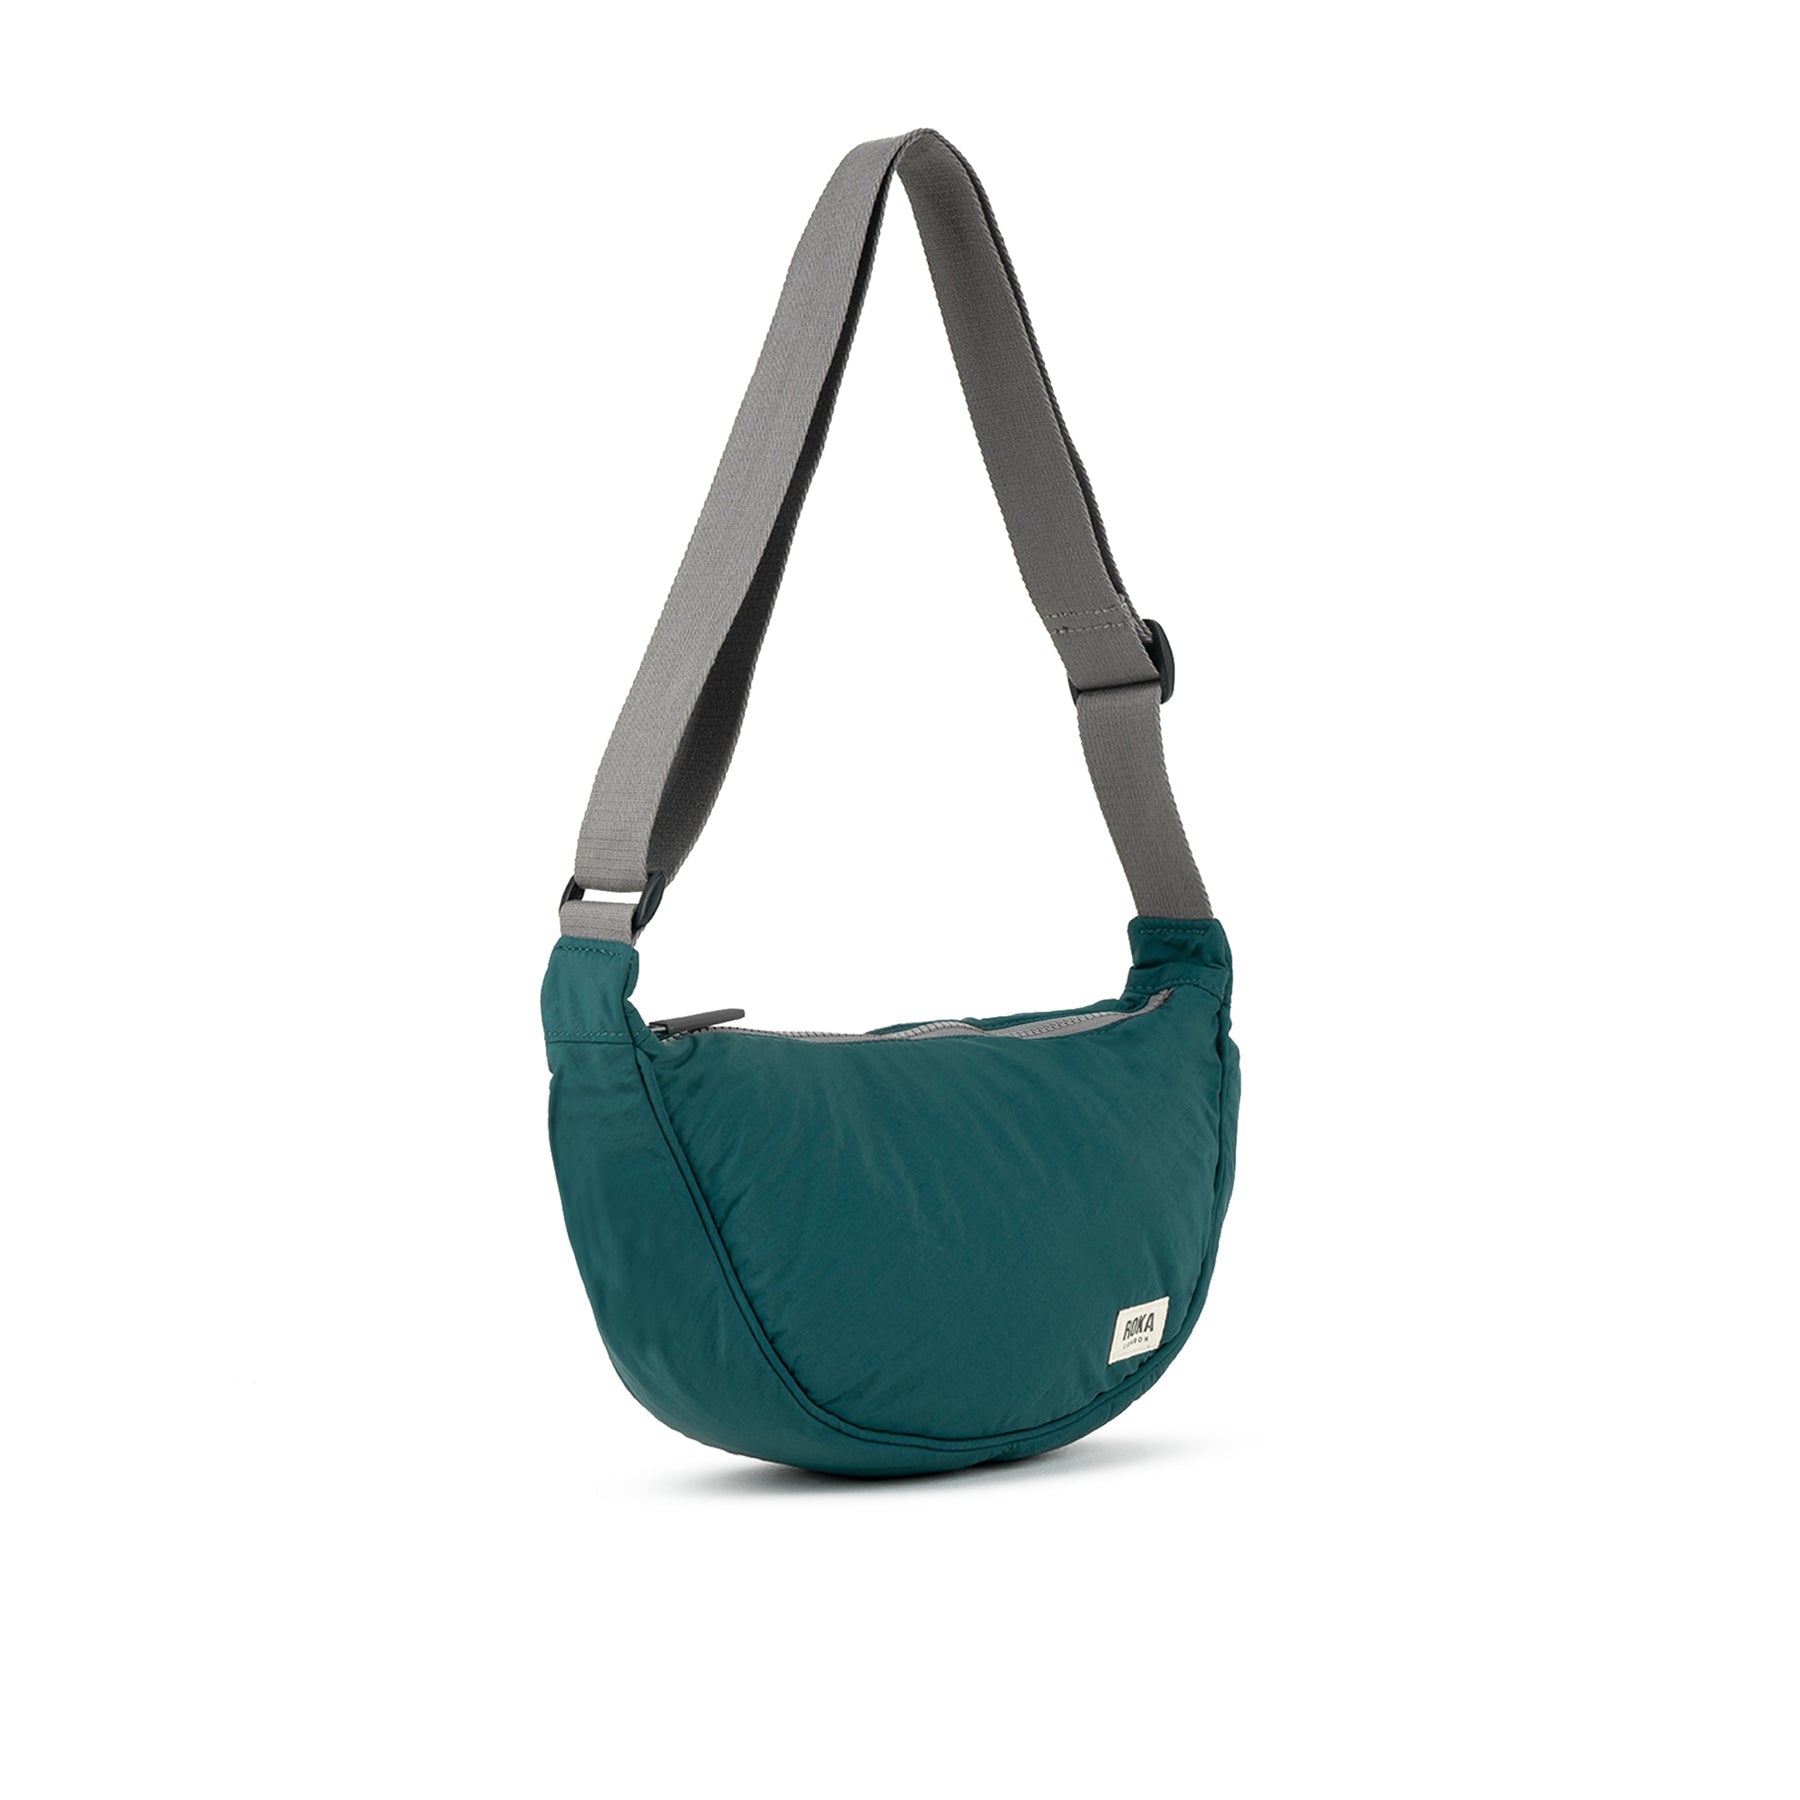 ROKA Farringdon Teal Recycled Taslon Bag - OS